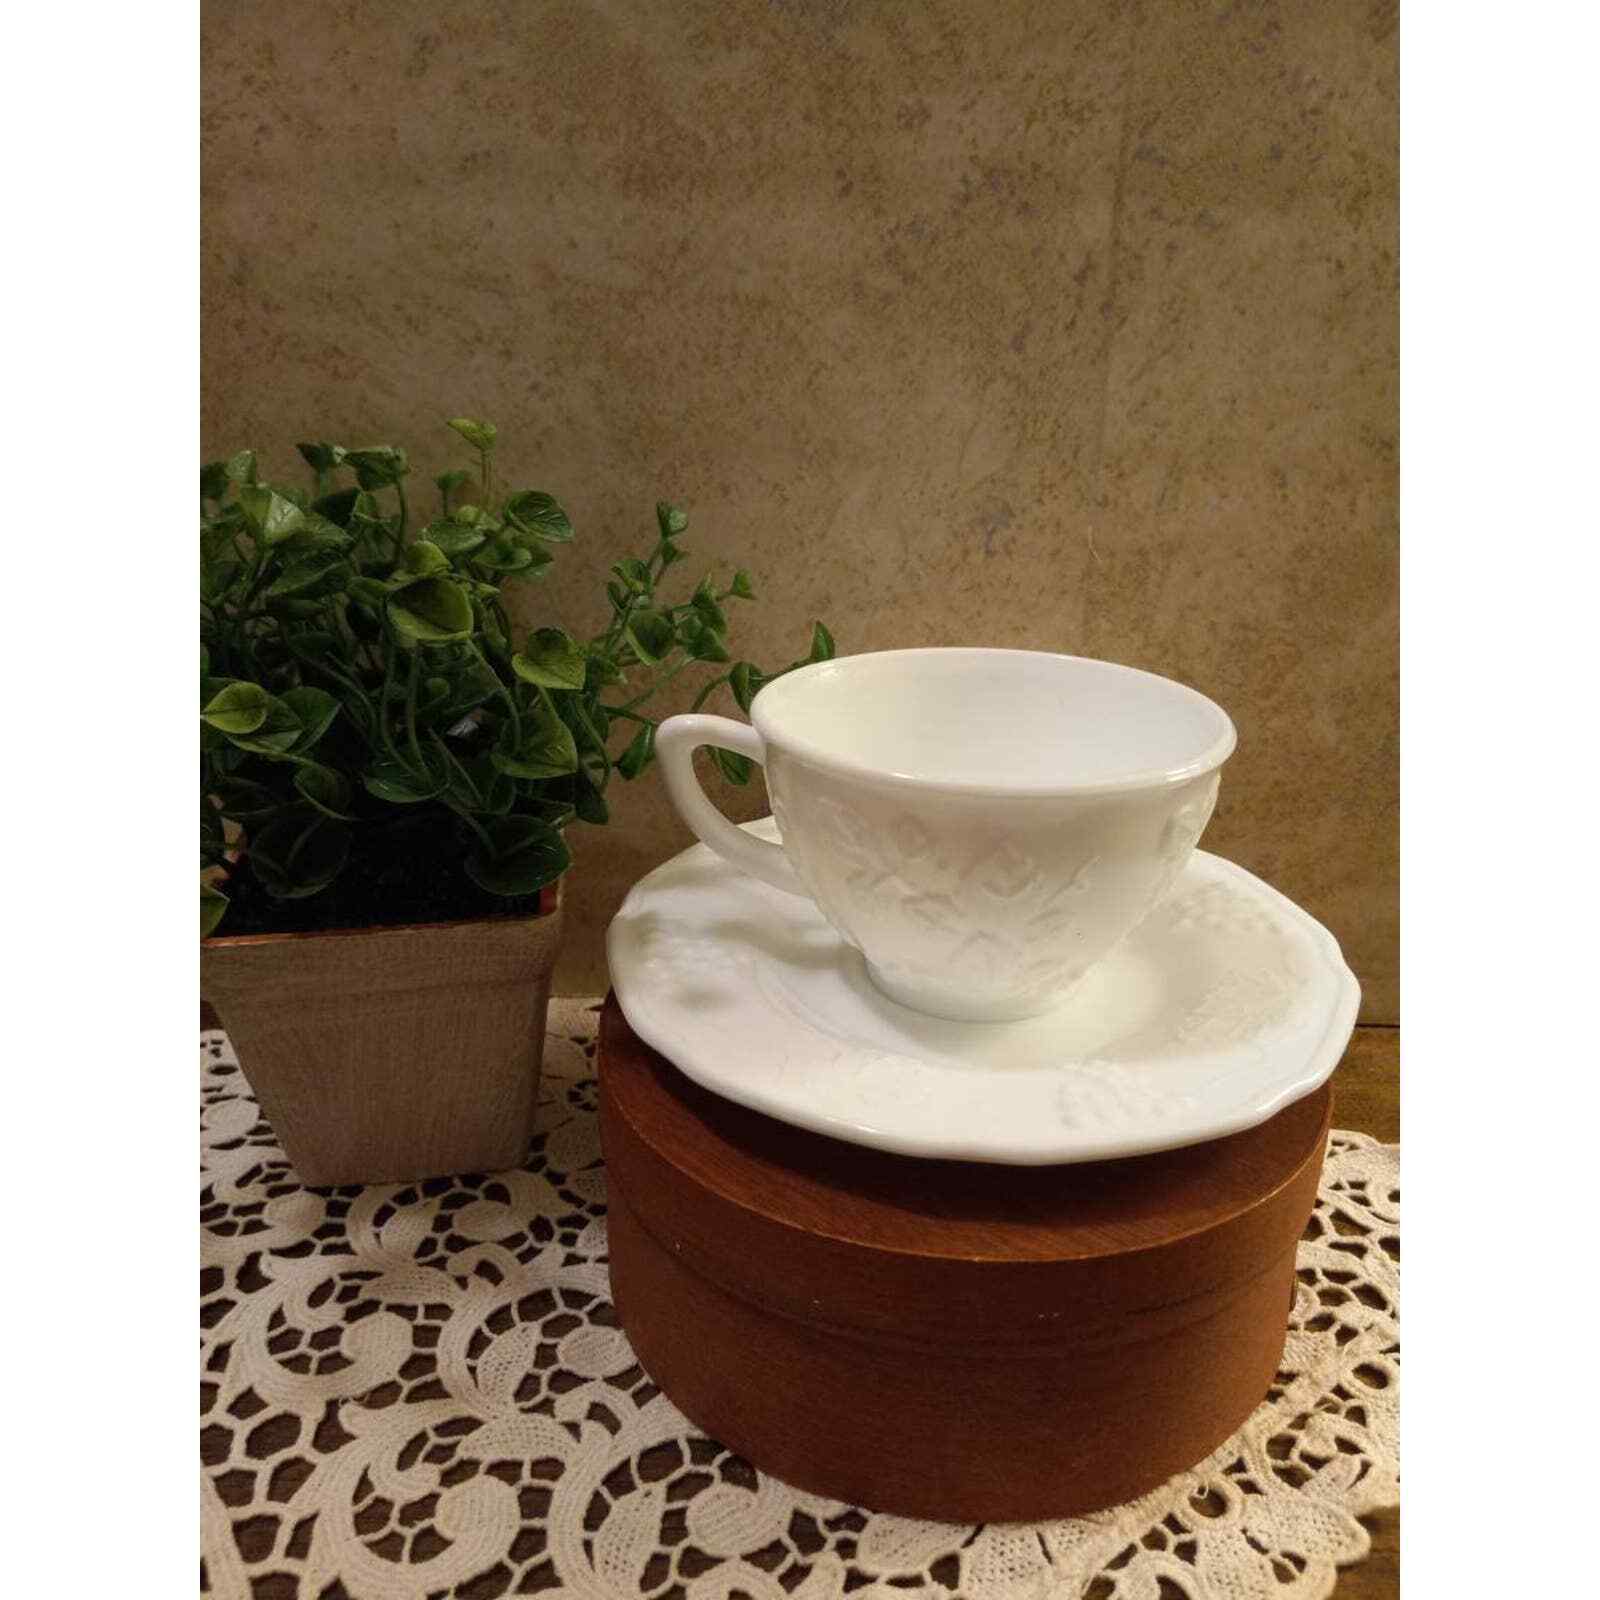 Vintage Milk Glass Colony Harvest teacup and saucer, Fruit pattern, Cottage core